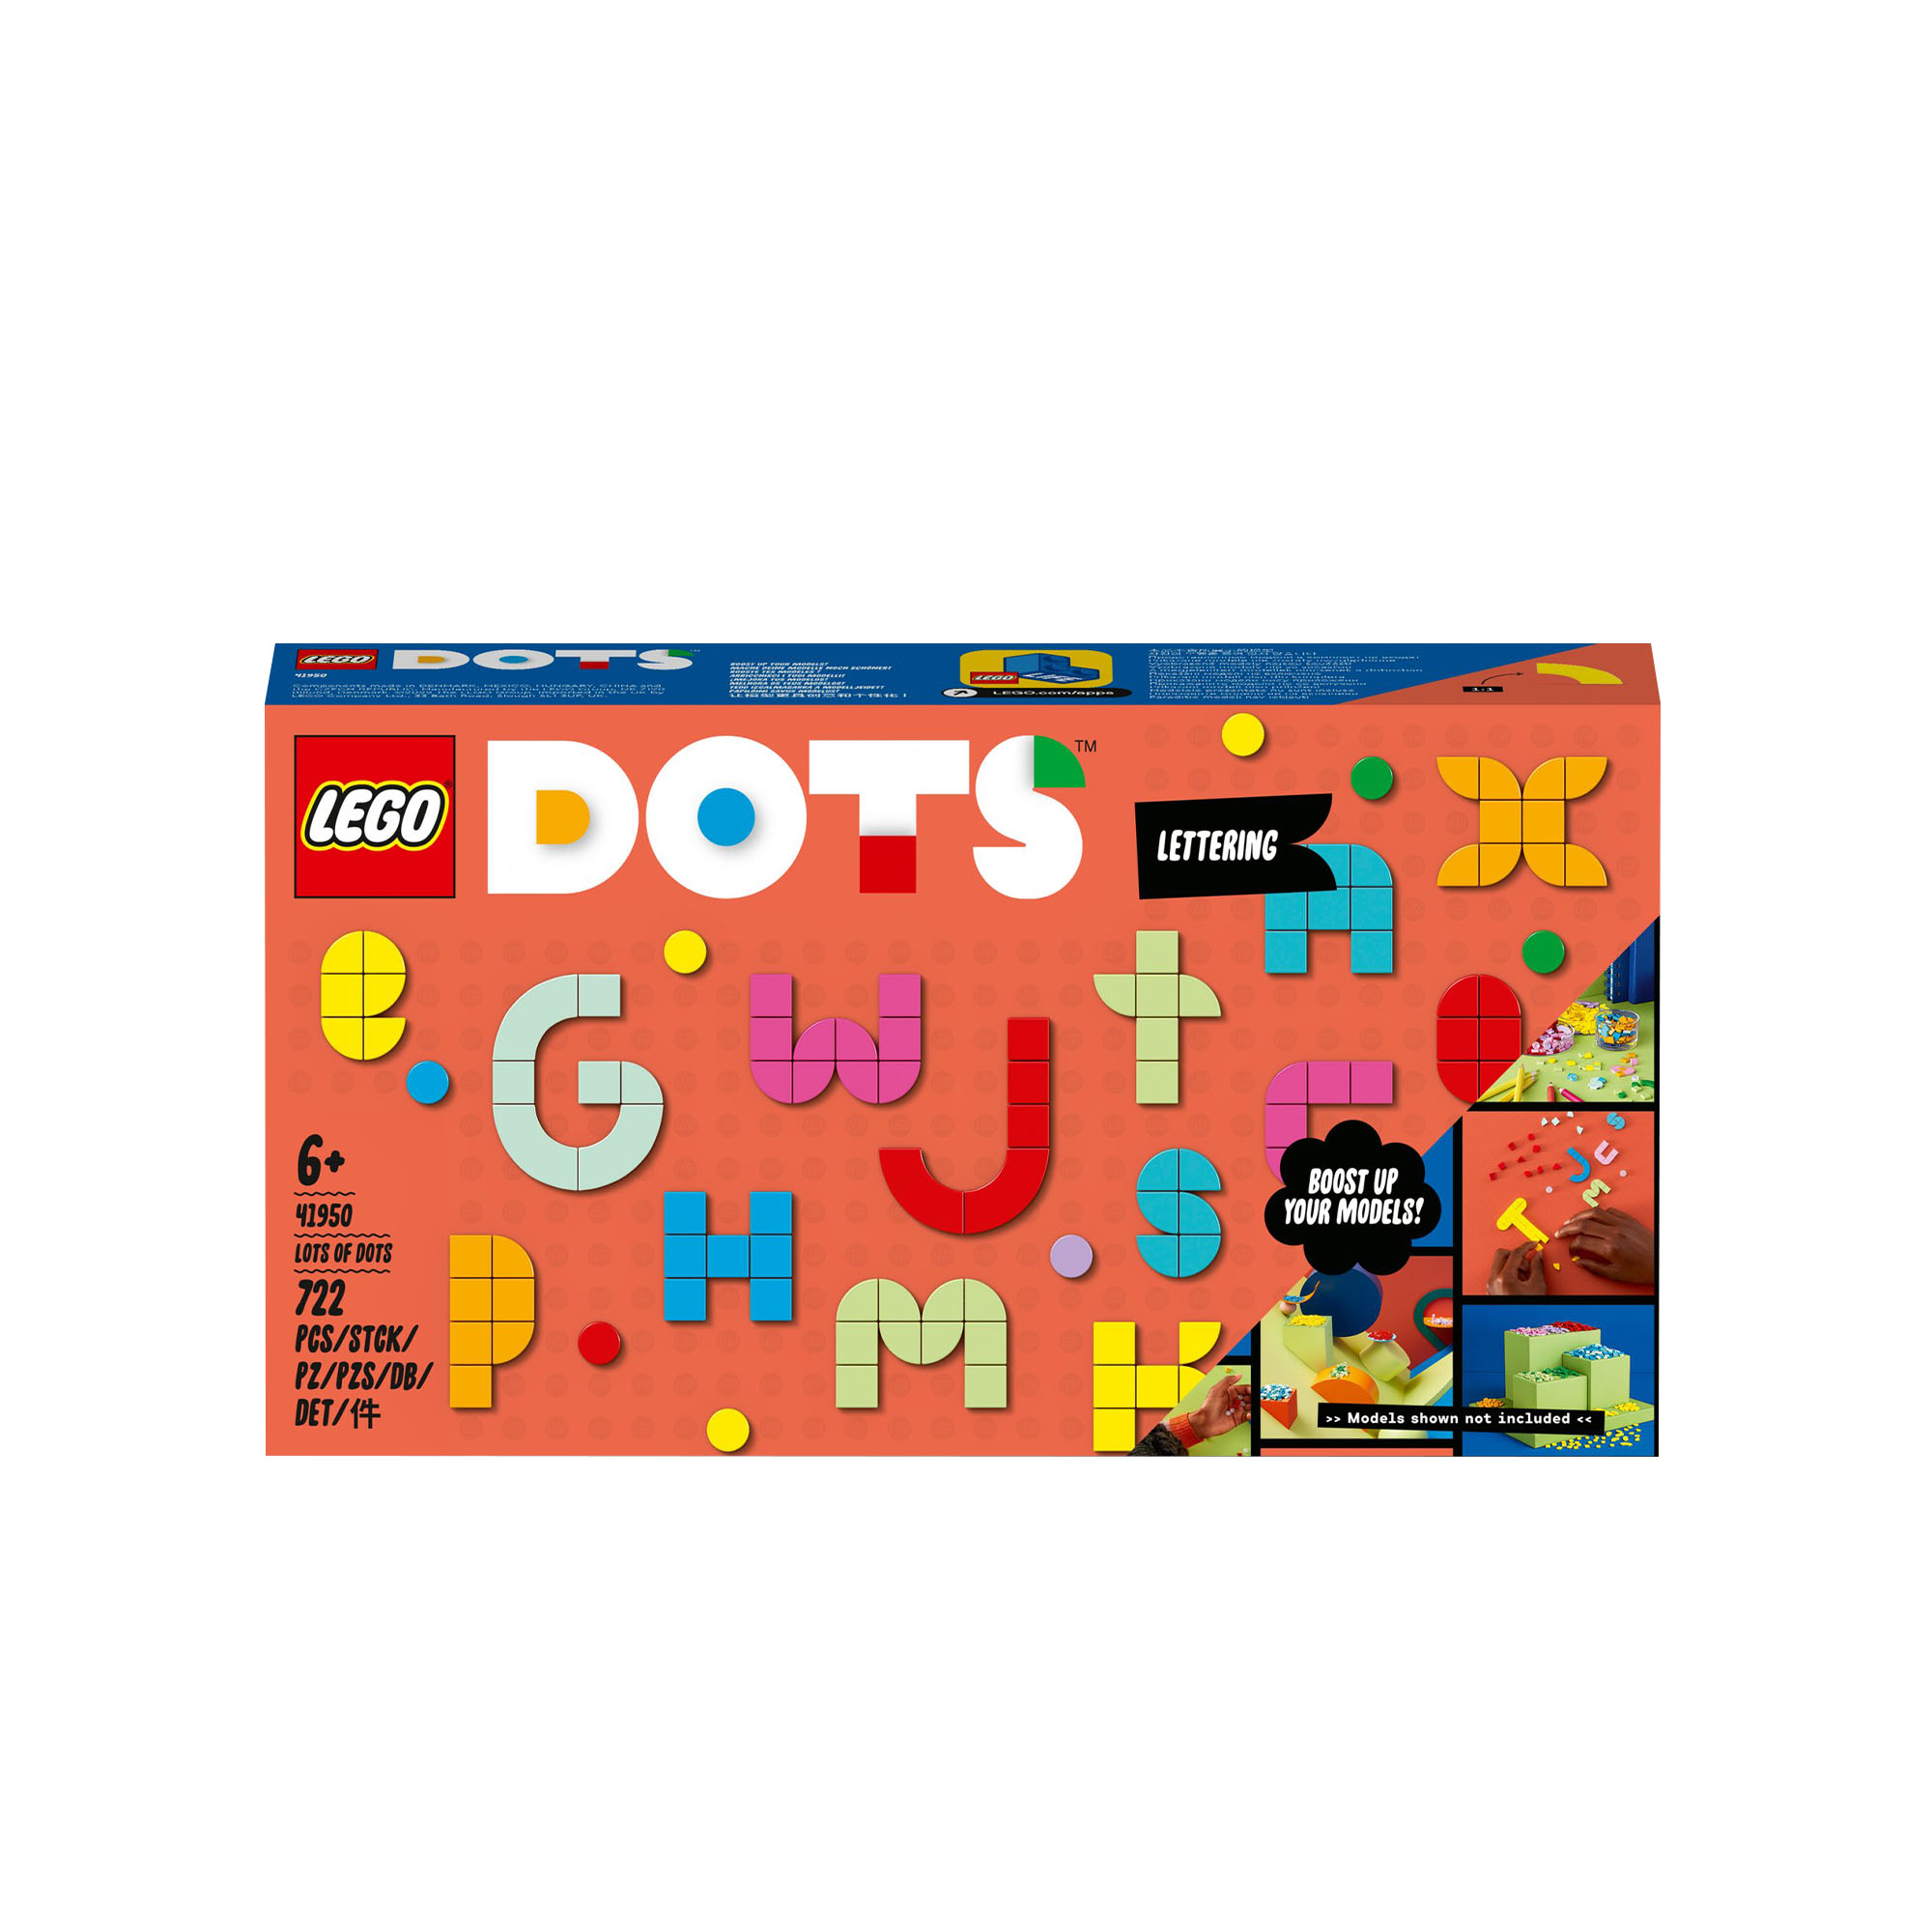 LEGO 41950 DOTS MEGA PACK - Lettere e Caratteri, Giochi per Bambini dai 6 Anni i 41950, , large